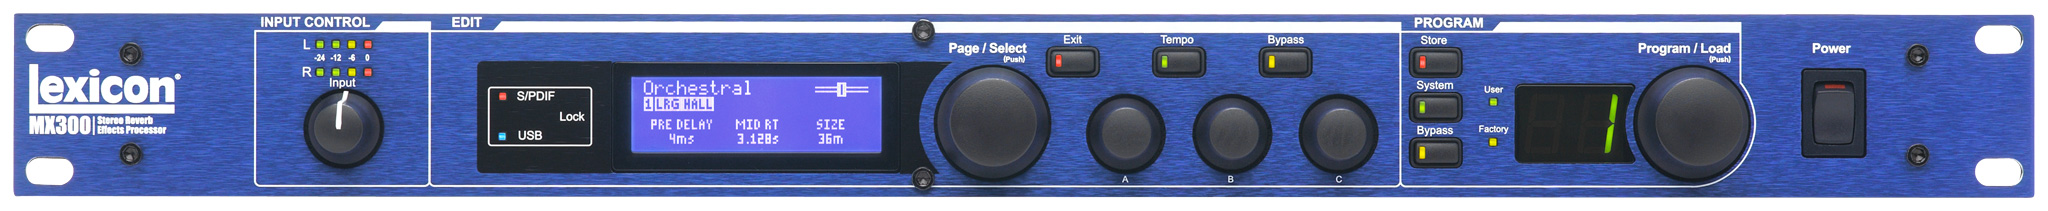 Bộ xử lý âm thanh LEXICON MX300